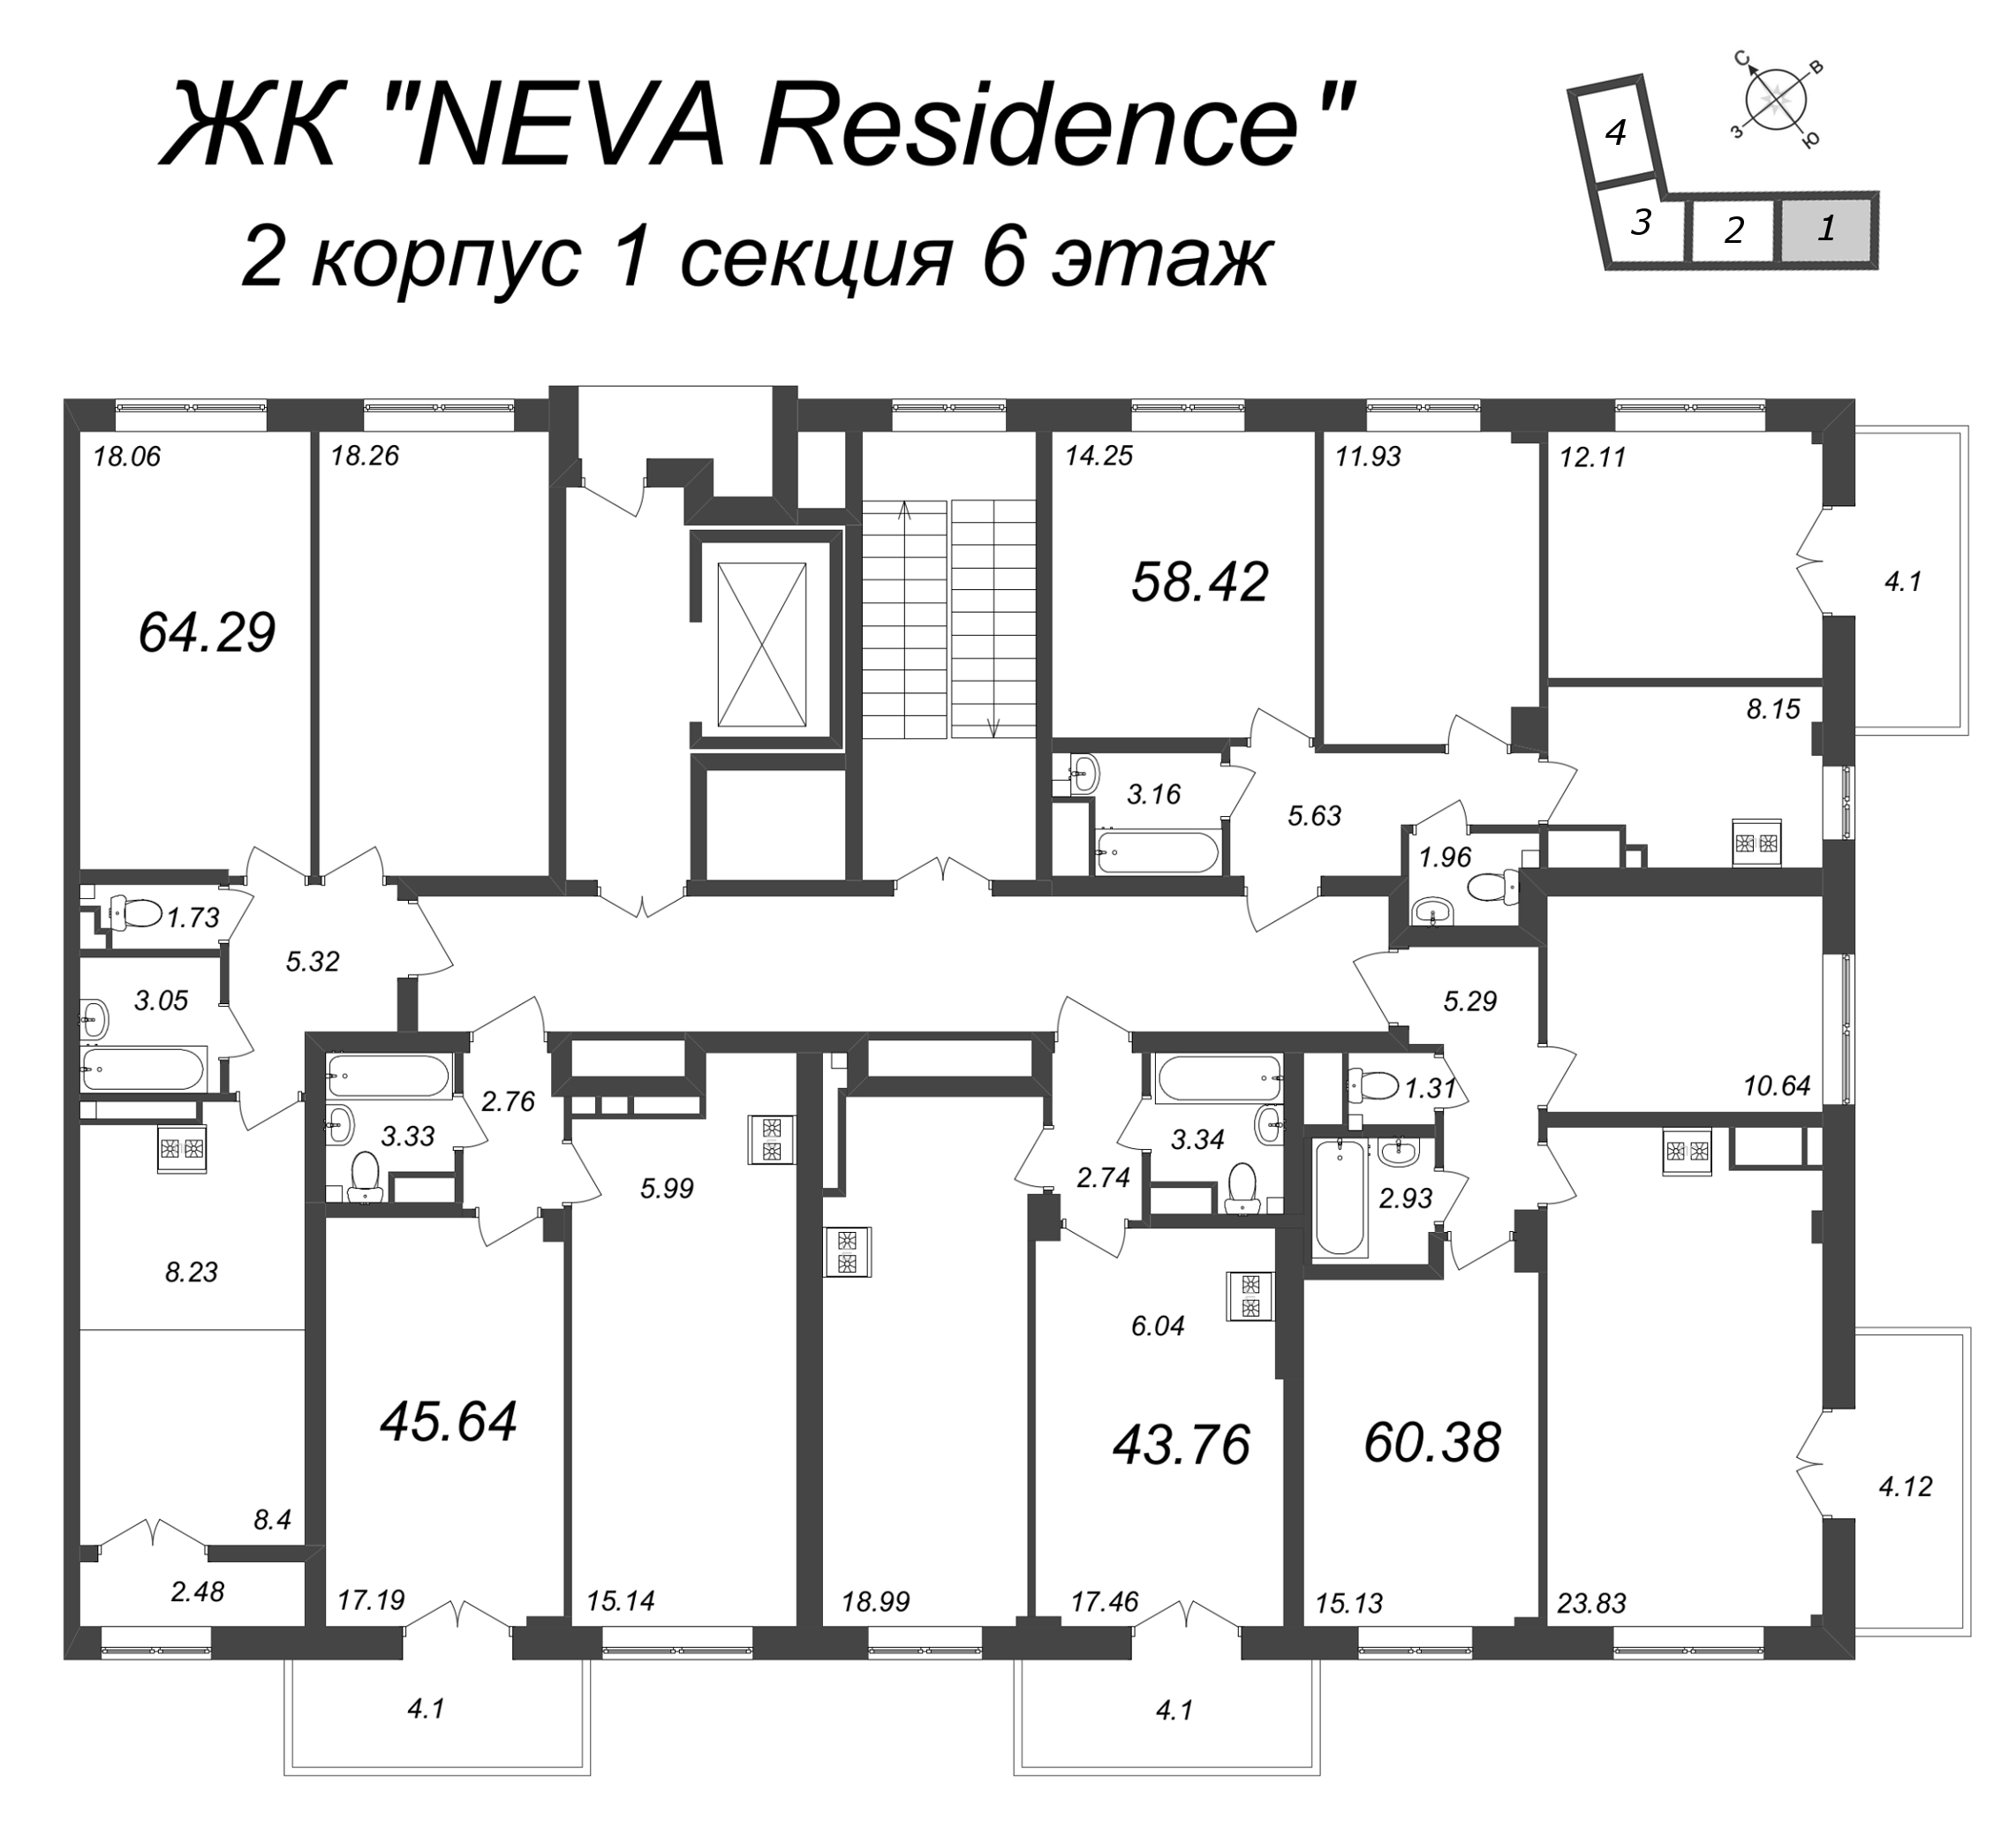 2-комнатная (Евро) квартира, 45.64 м² - планировка этажа